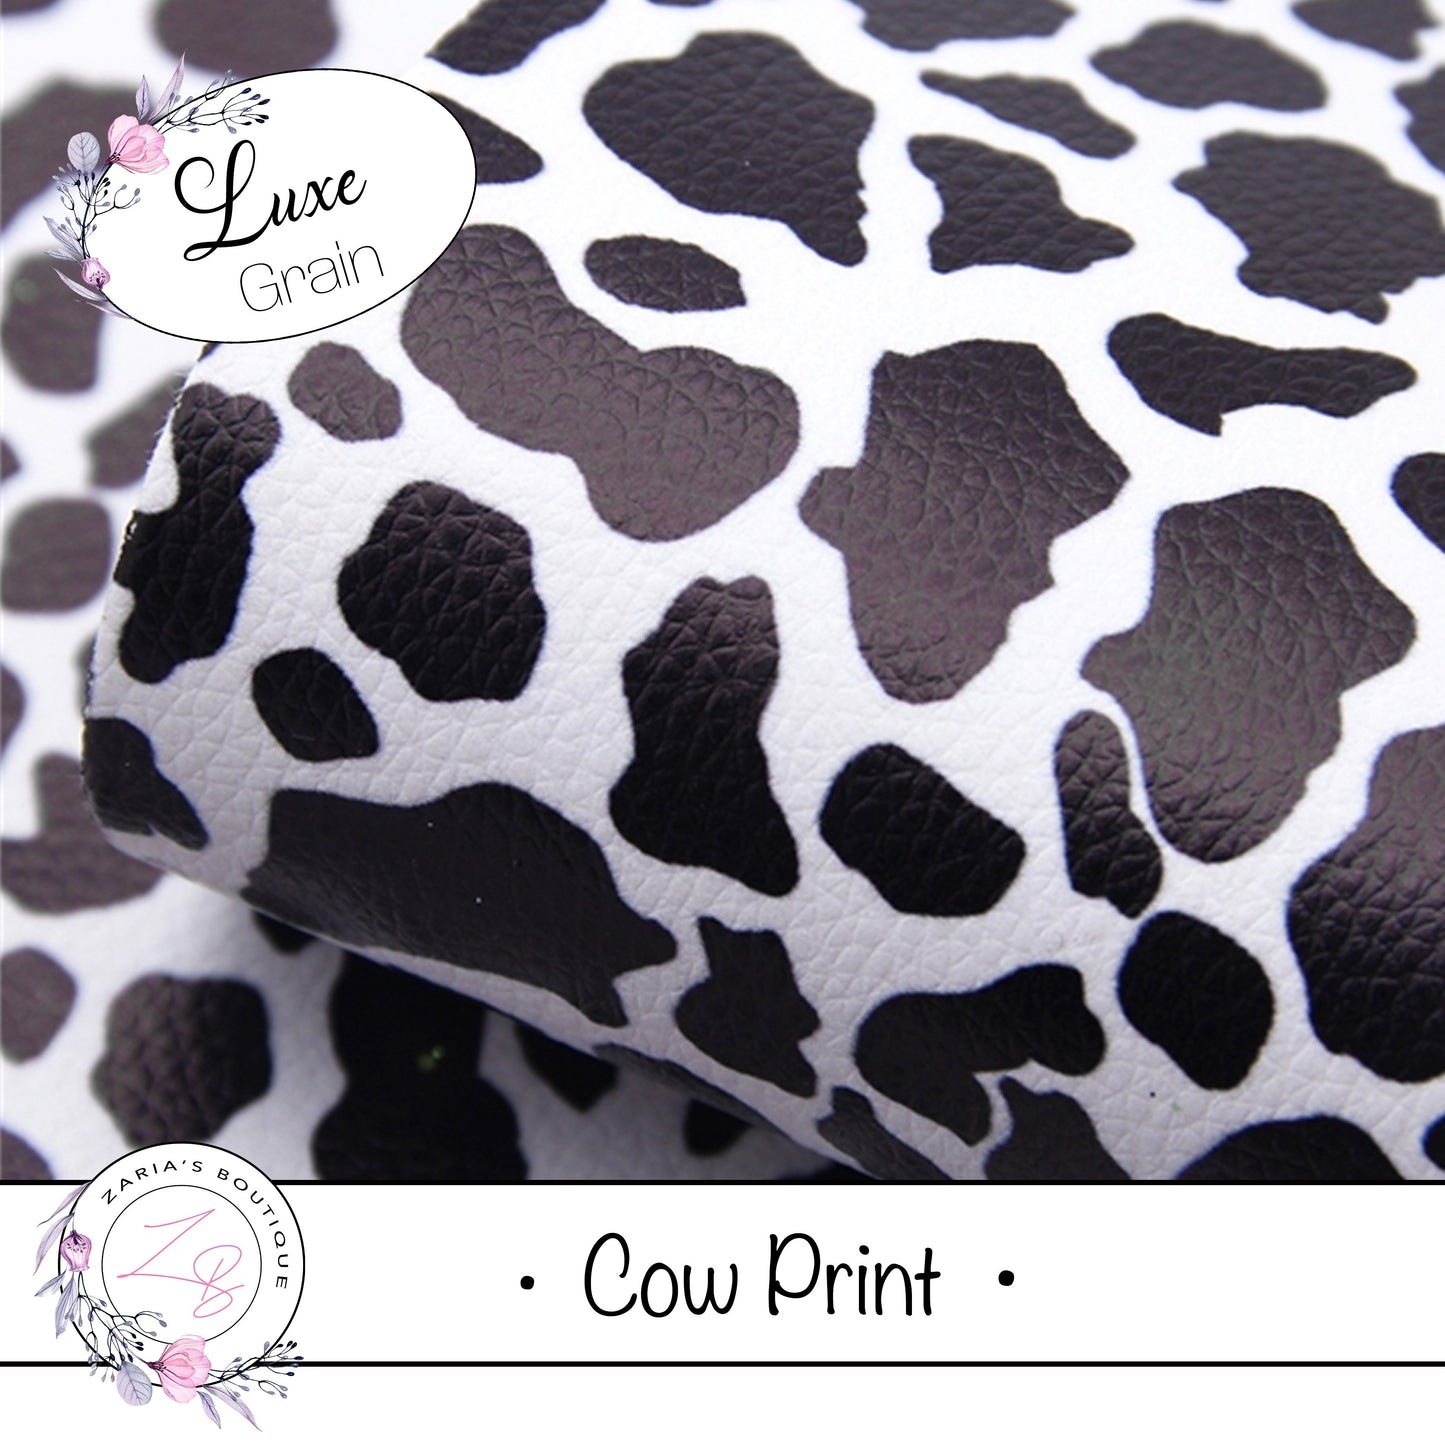 ⋅ Brown Cow Hide Print ⋅ Textured Leather ⋅ Flatback Resins ⋅